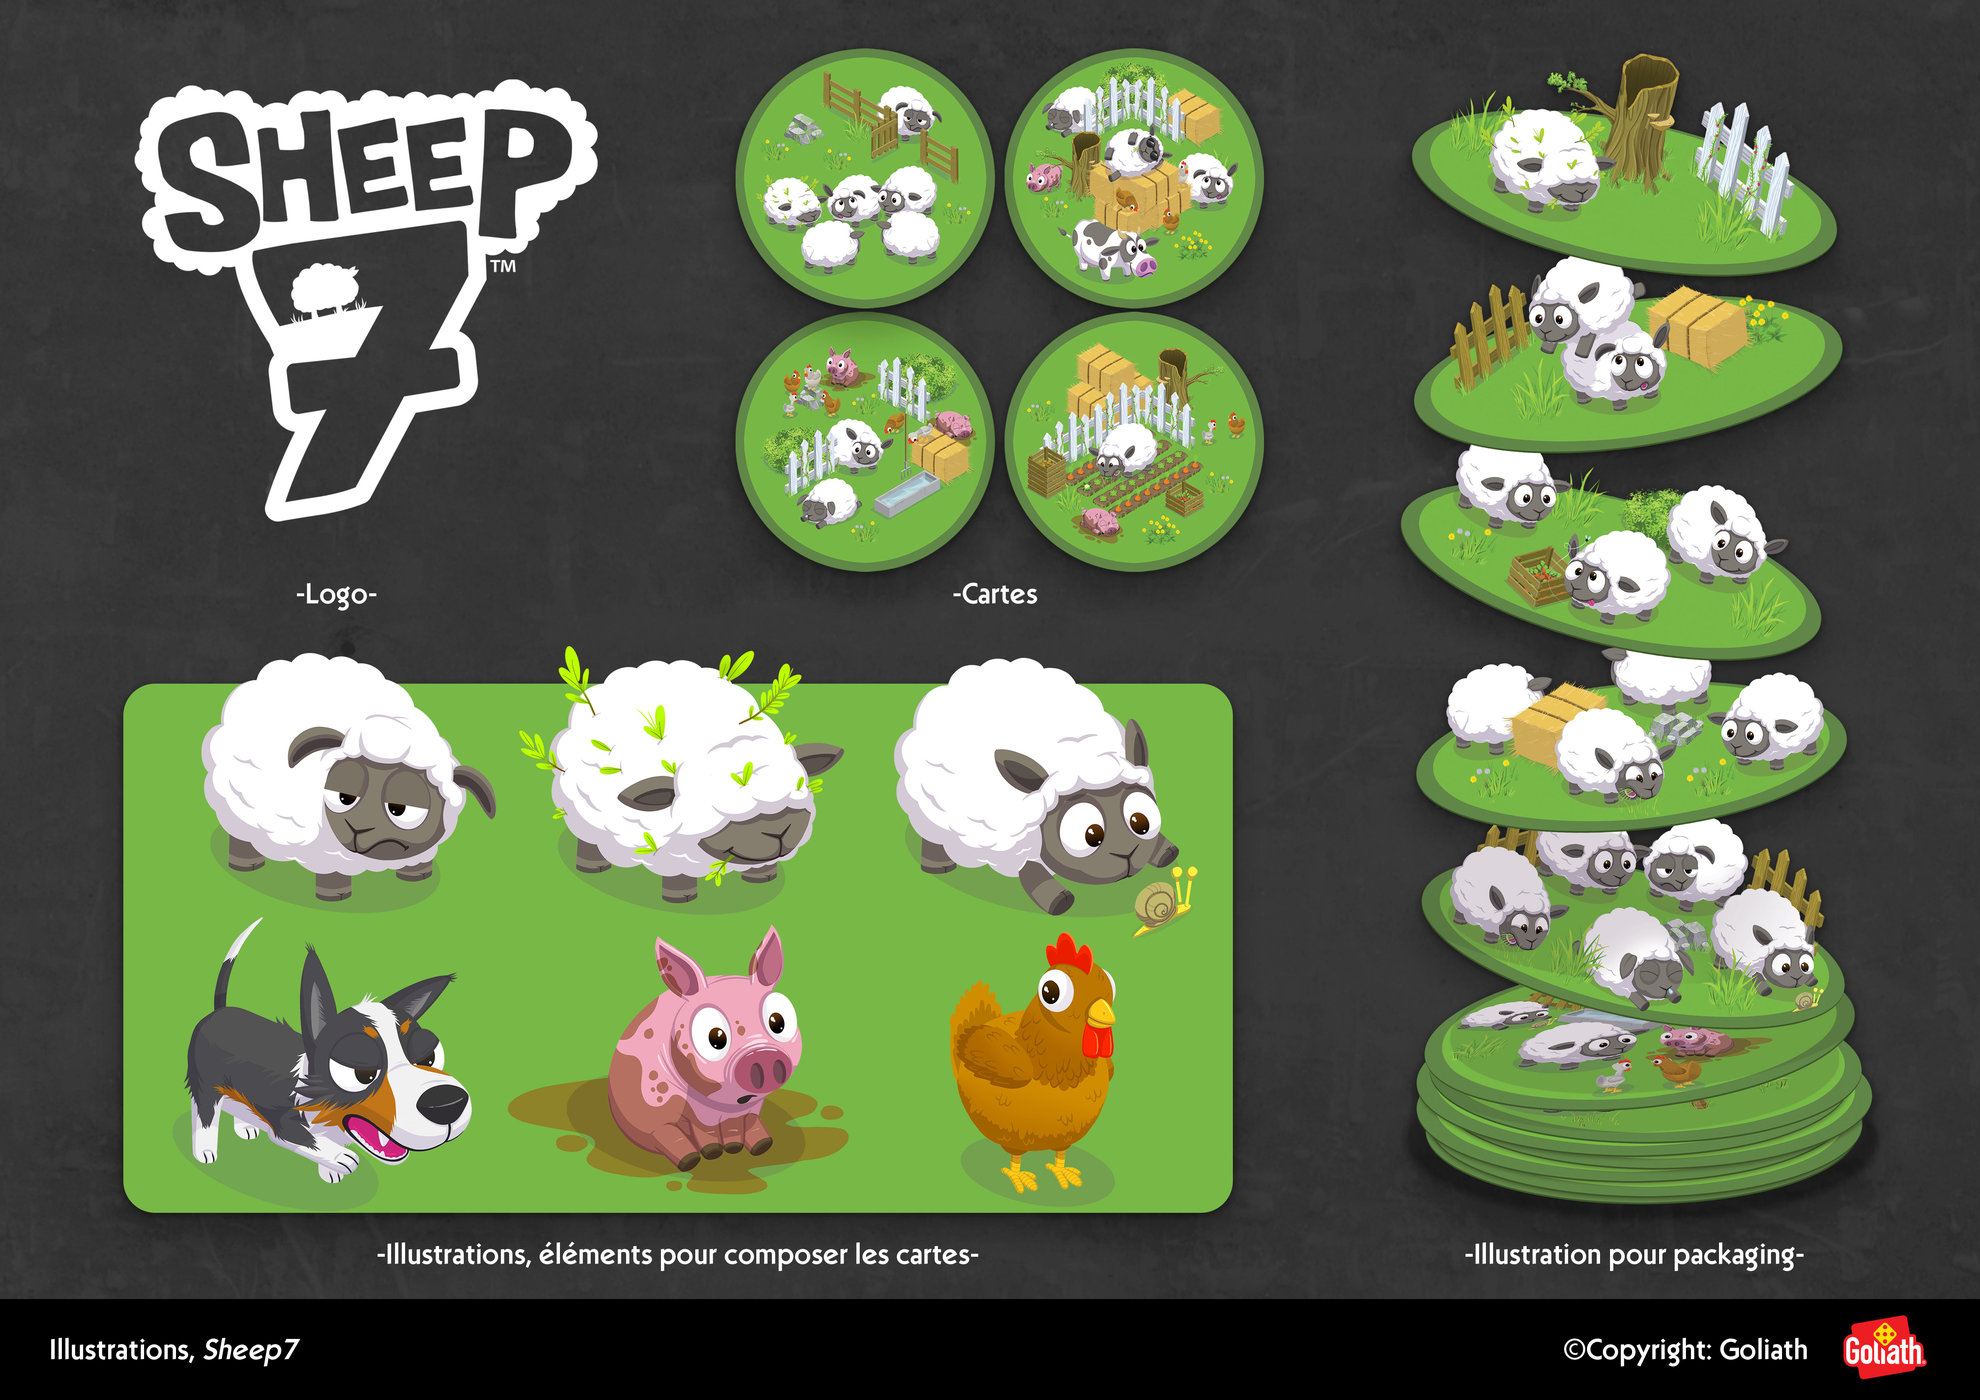 Illustrations, sheep7